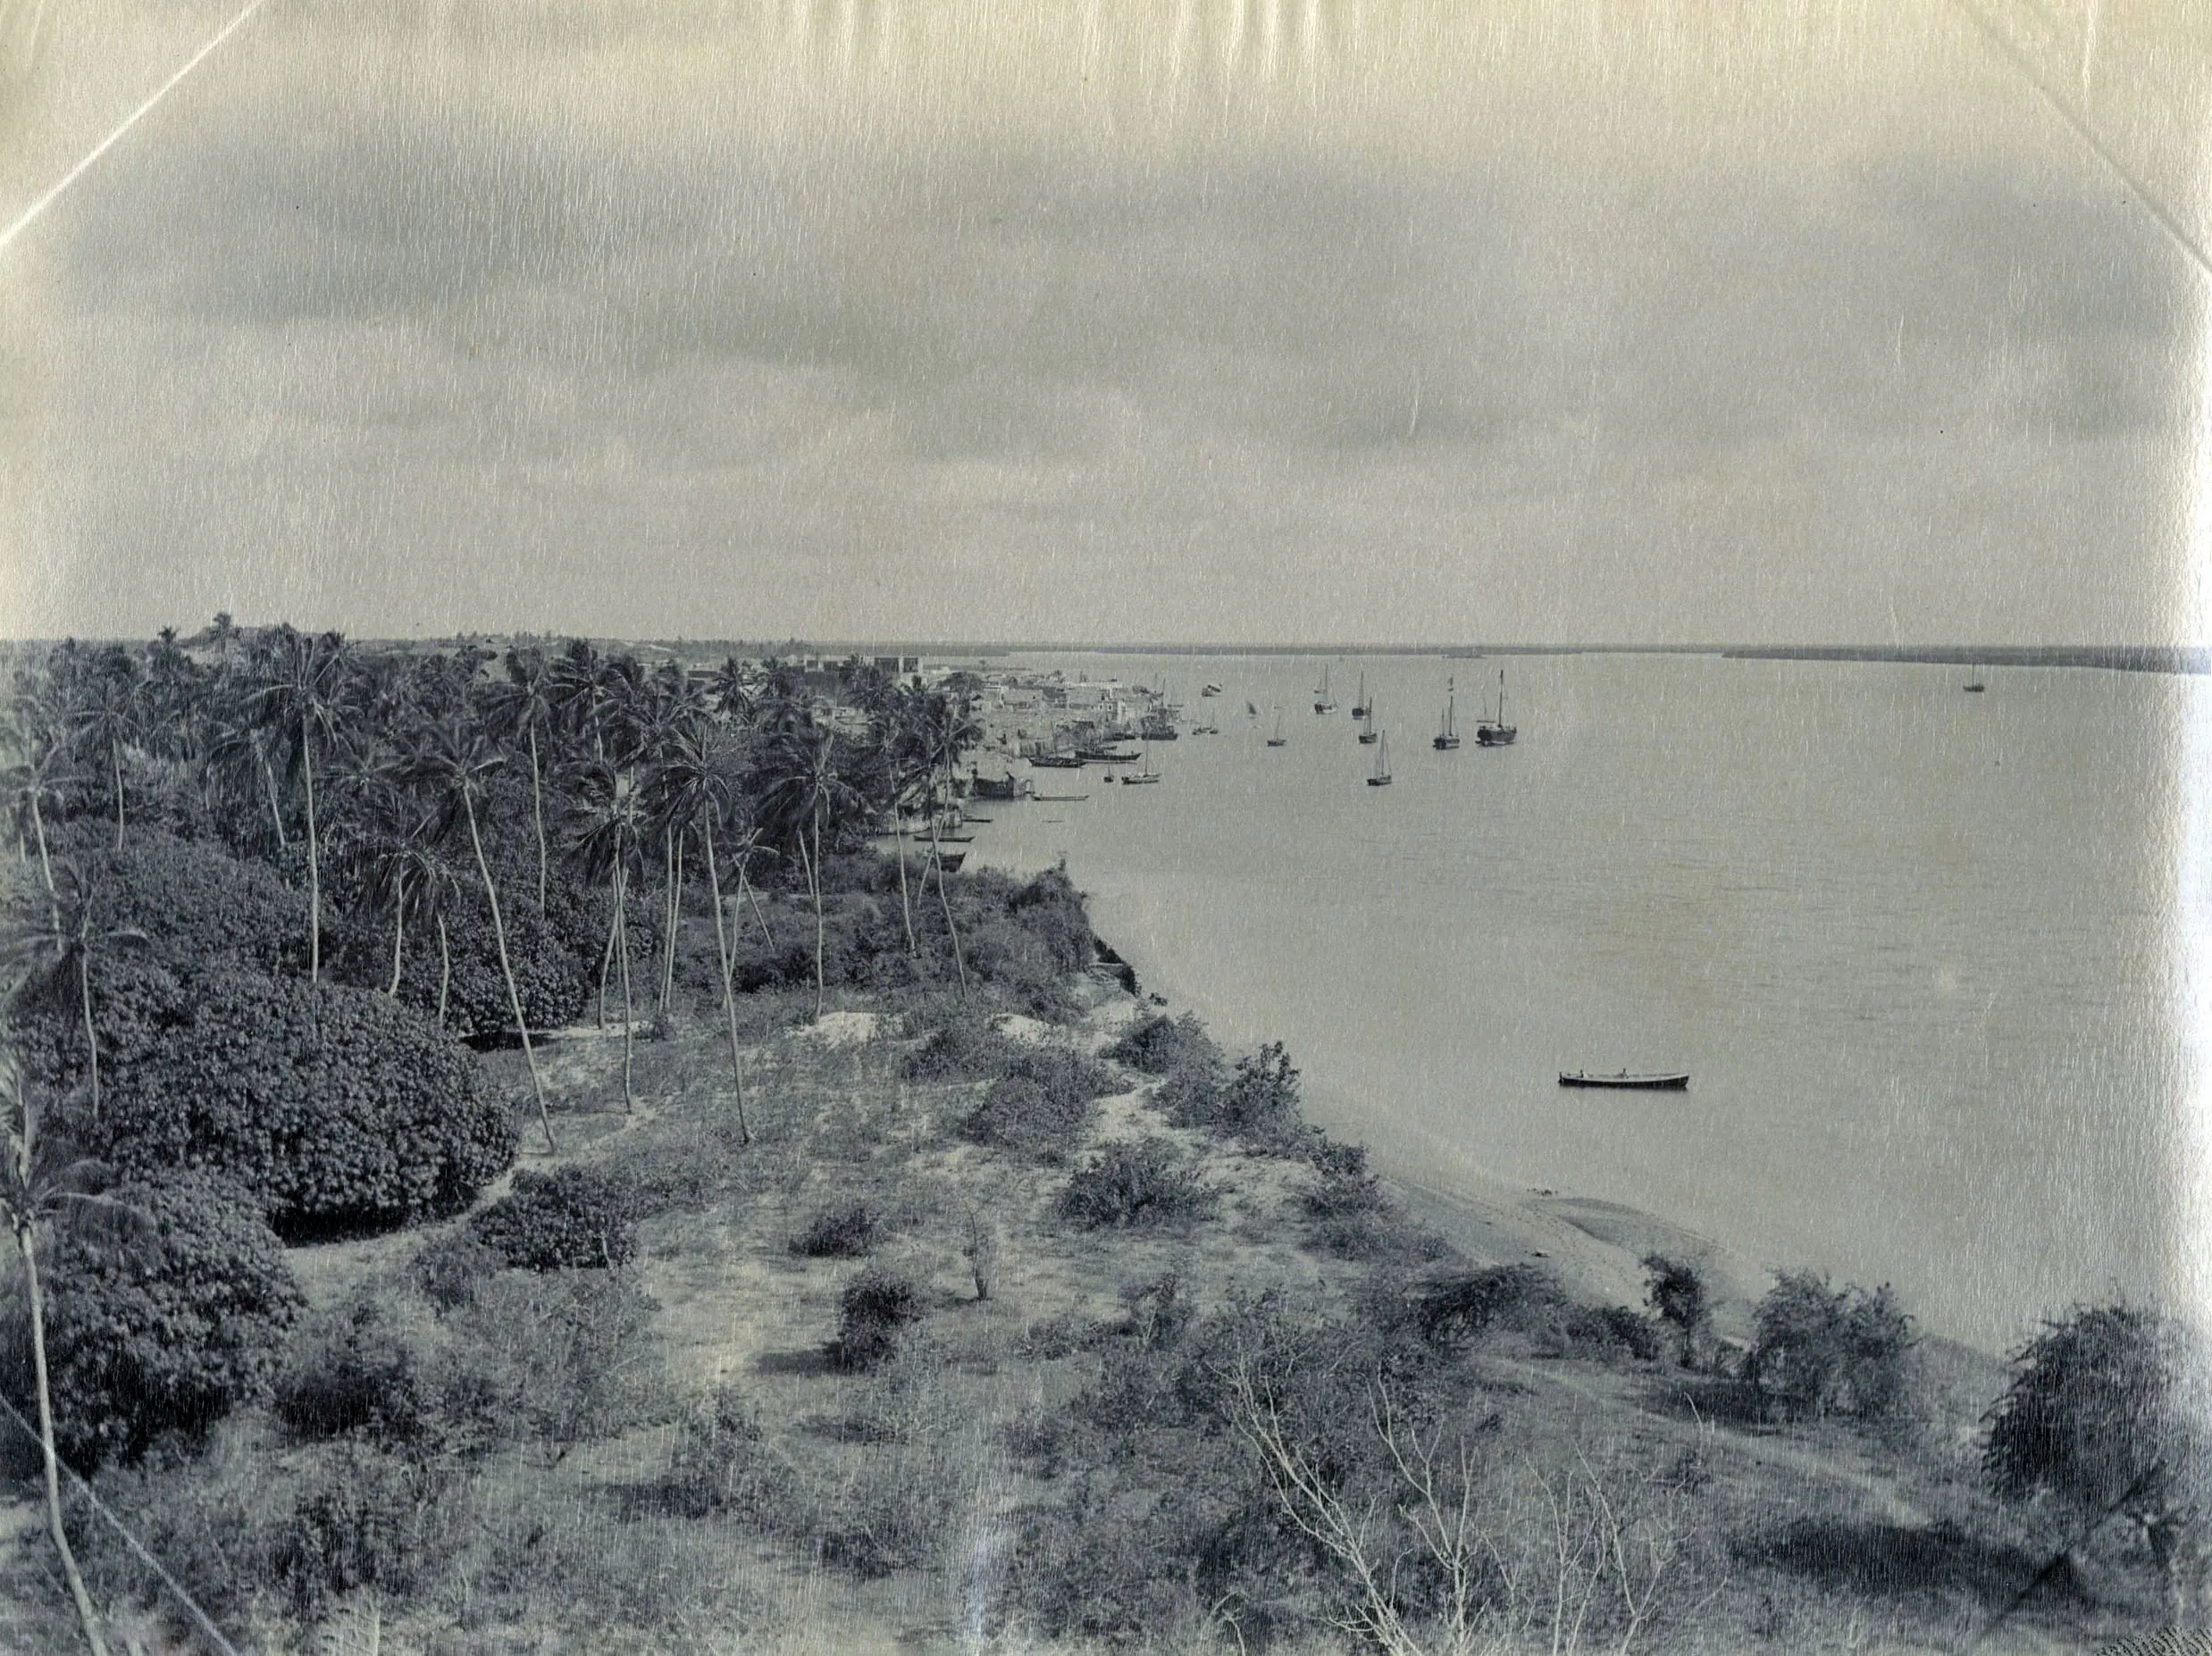 Lamu, circa 1880, by C. S. Joux